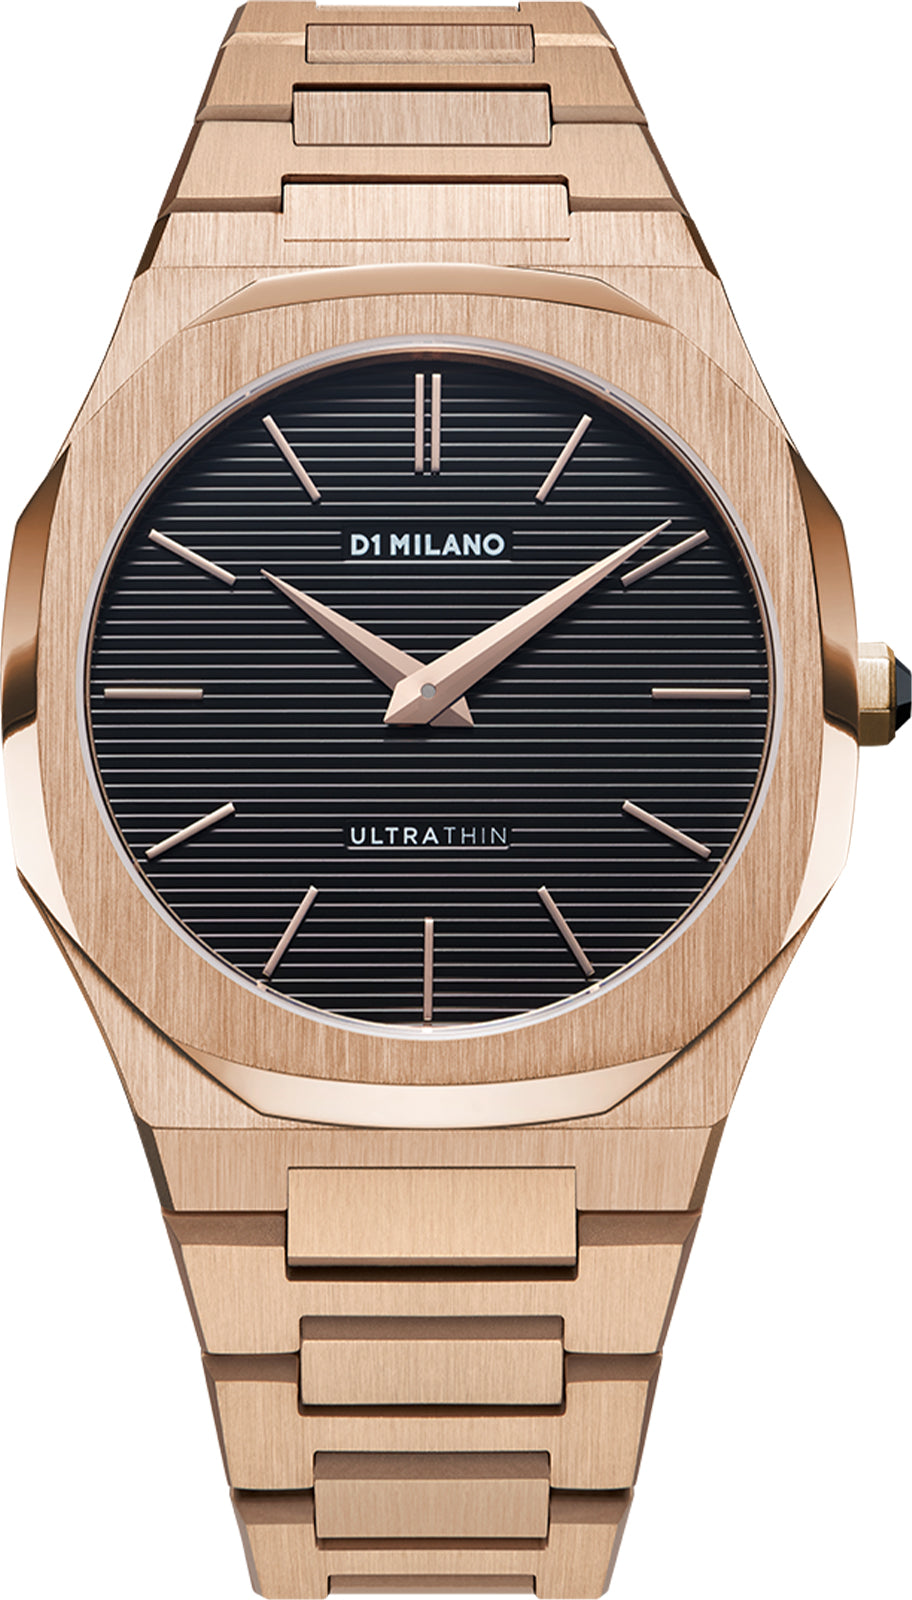 Photos - Wrist Watch Milano D1  Watch Ultra Thin - Black DLM-035 